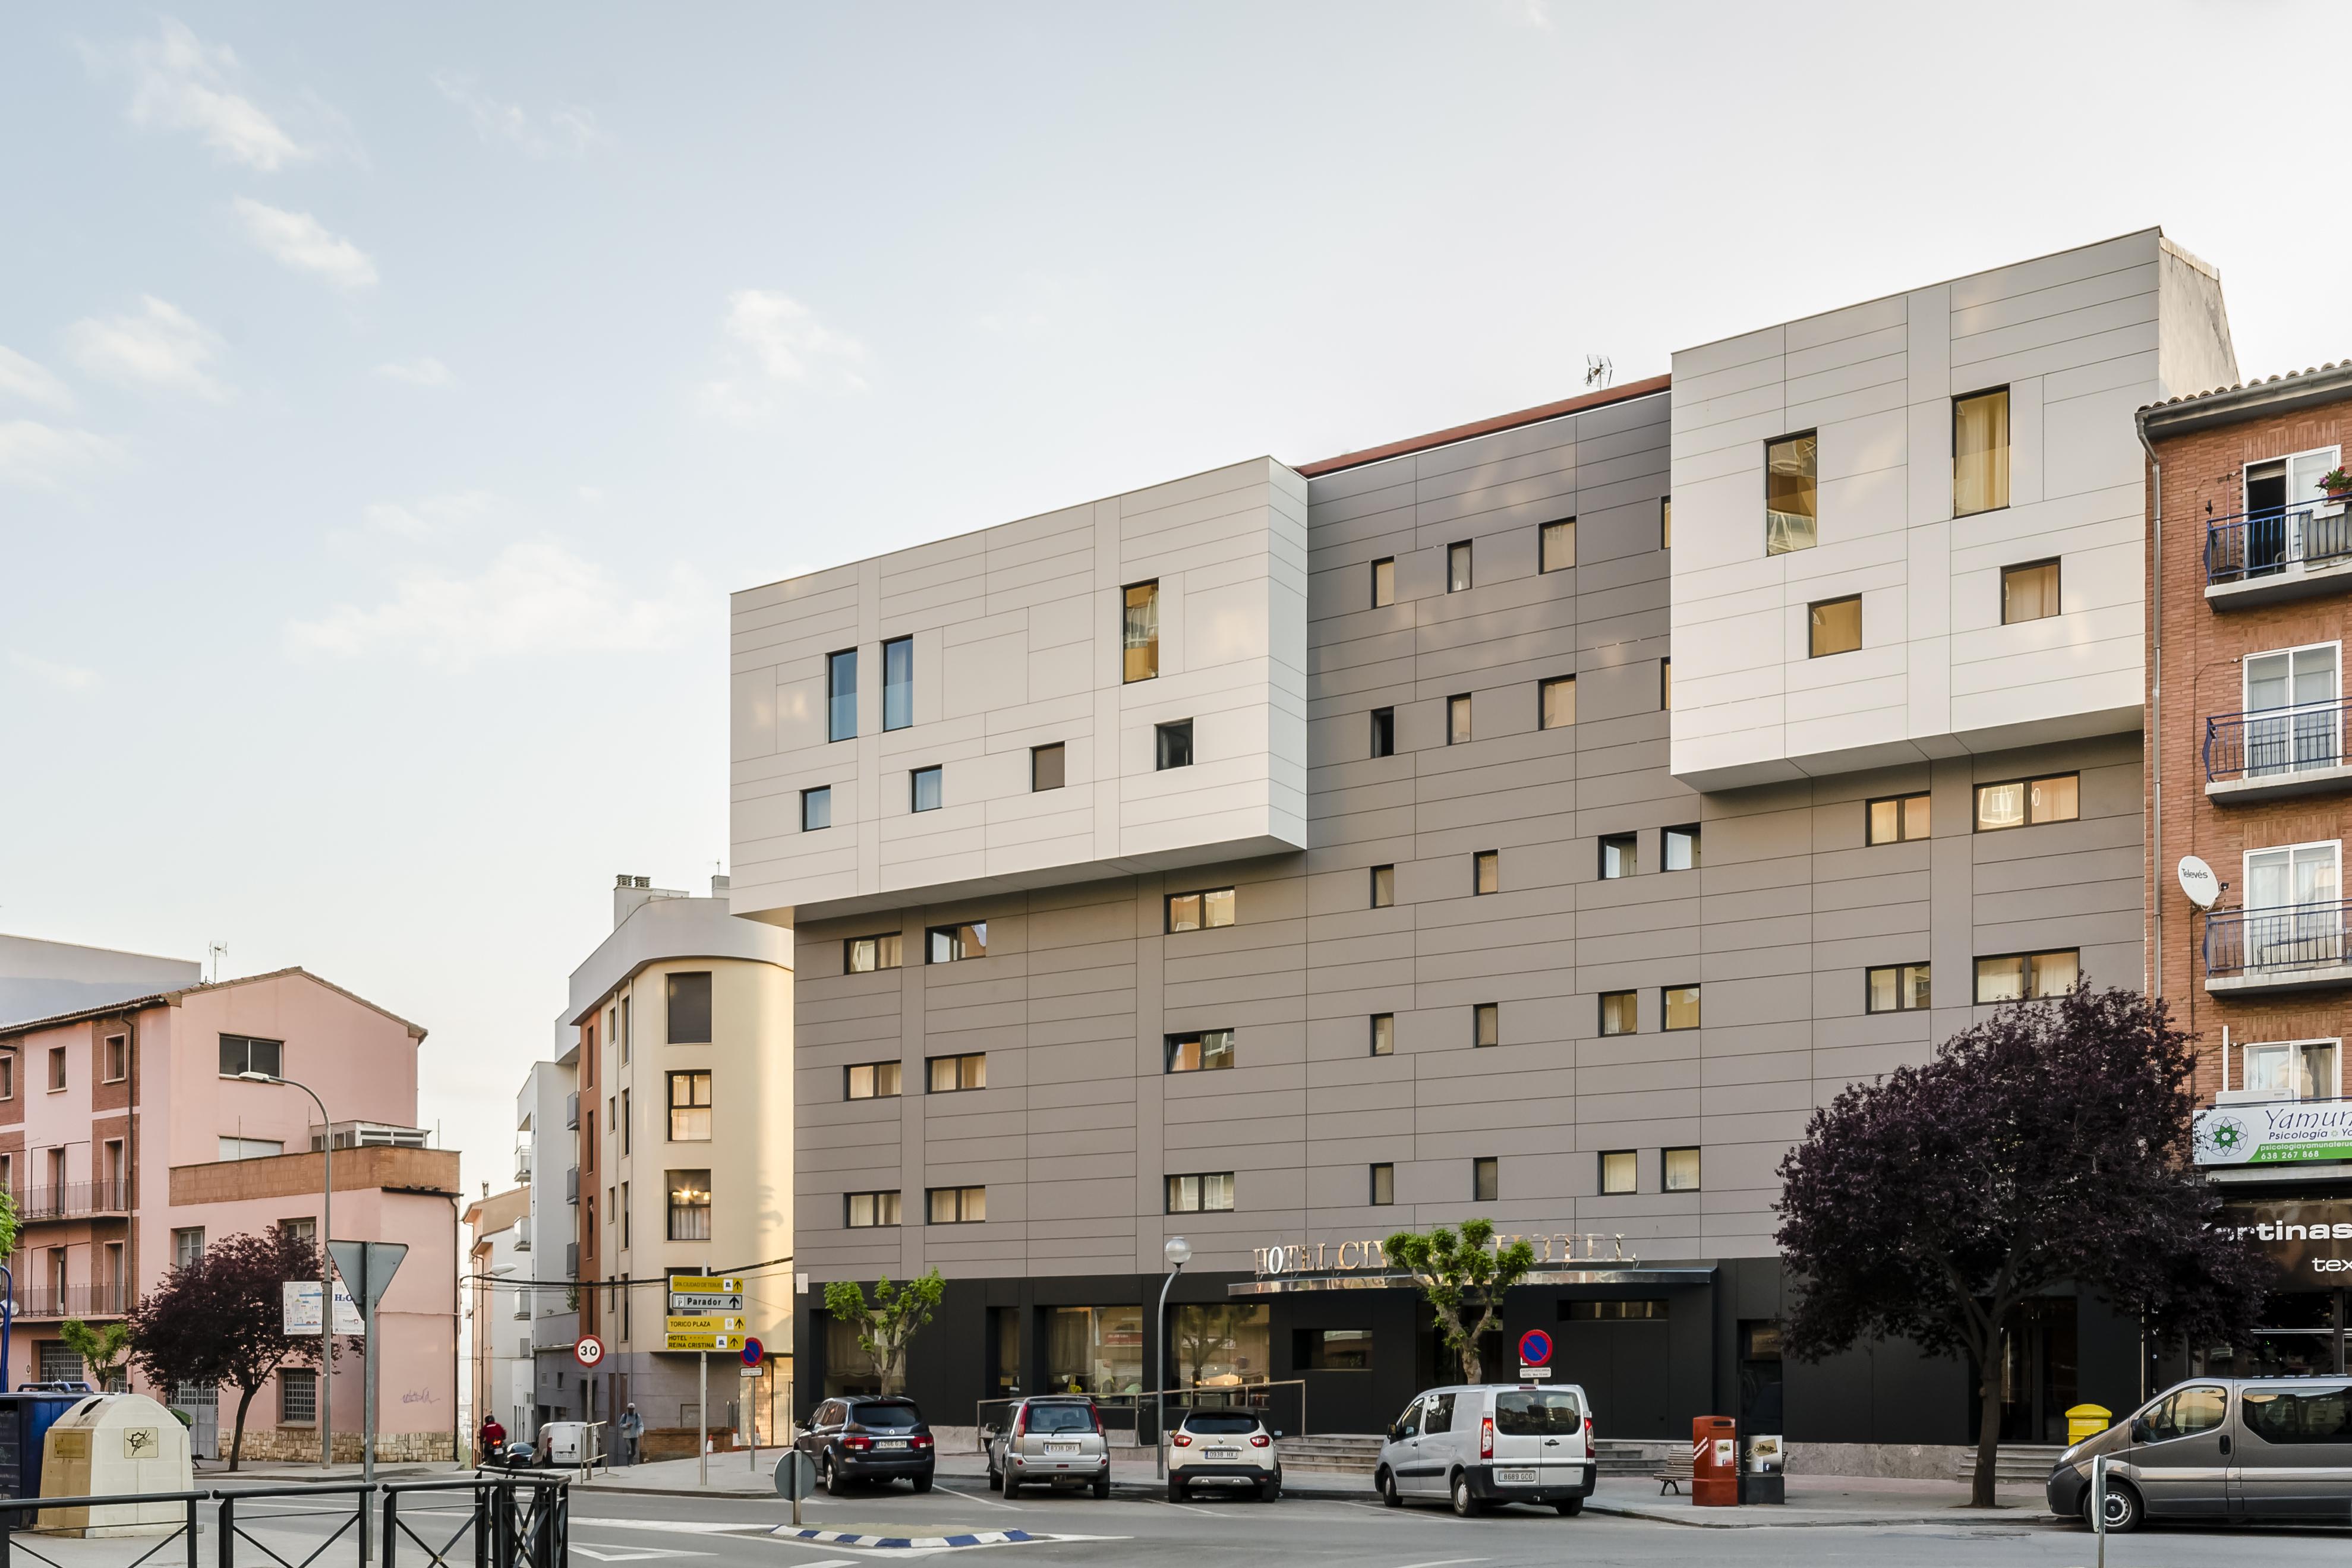 Hotel Civera Teruel Exterior foto